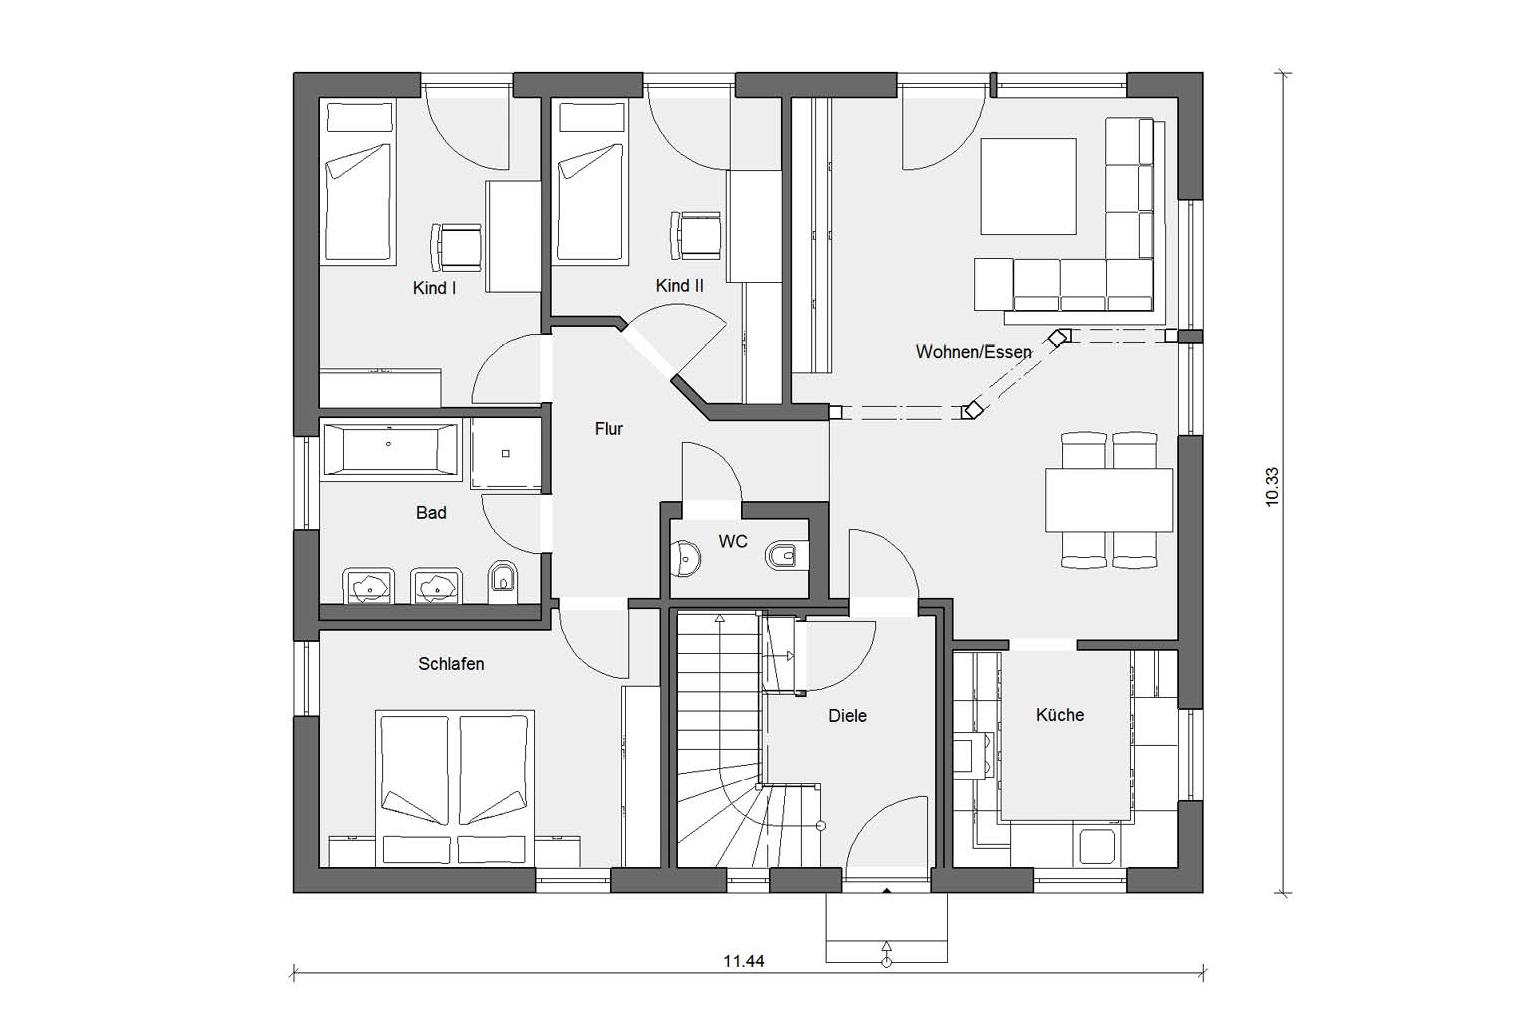 Floor plan ground floor M 15-199.2 two-family house